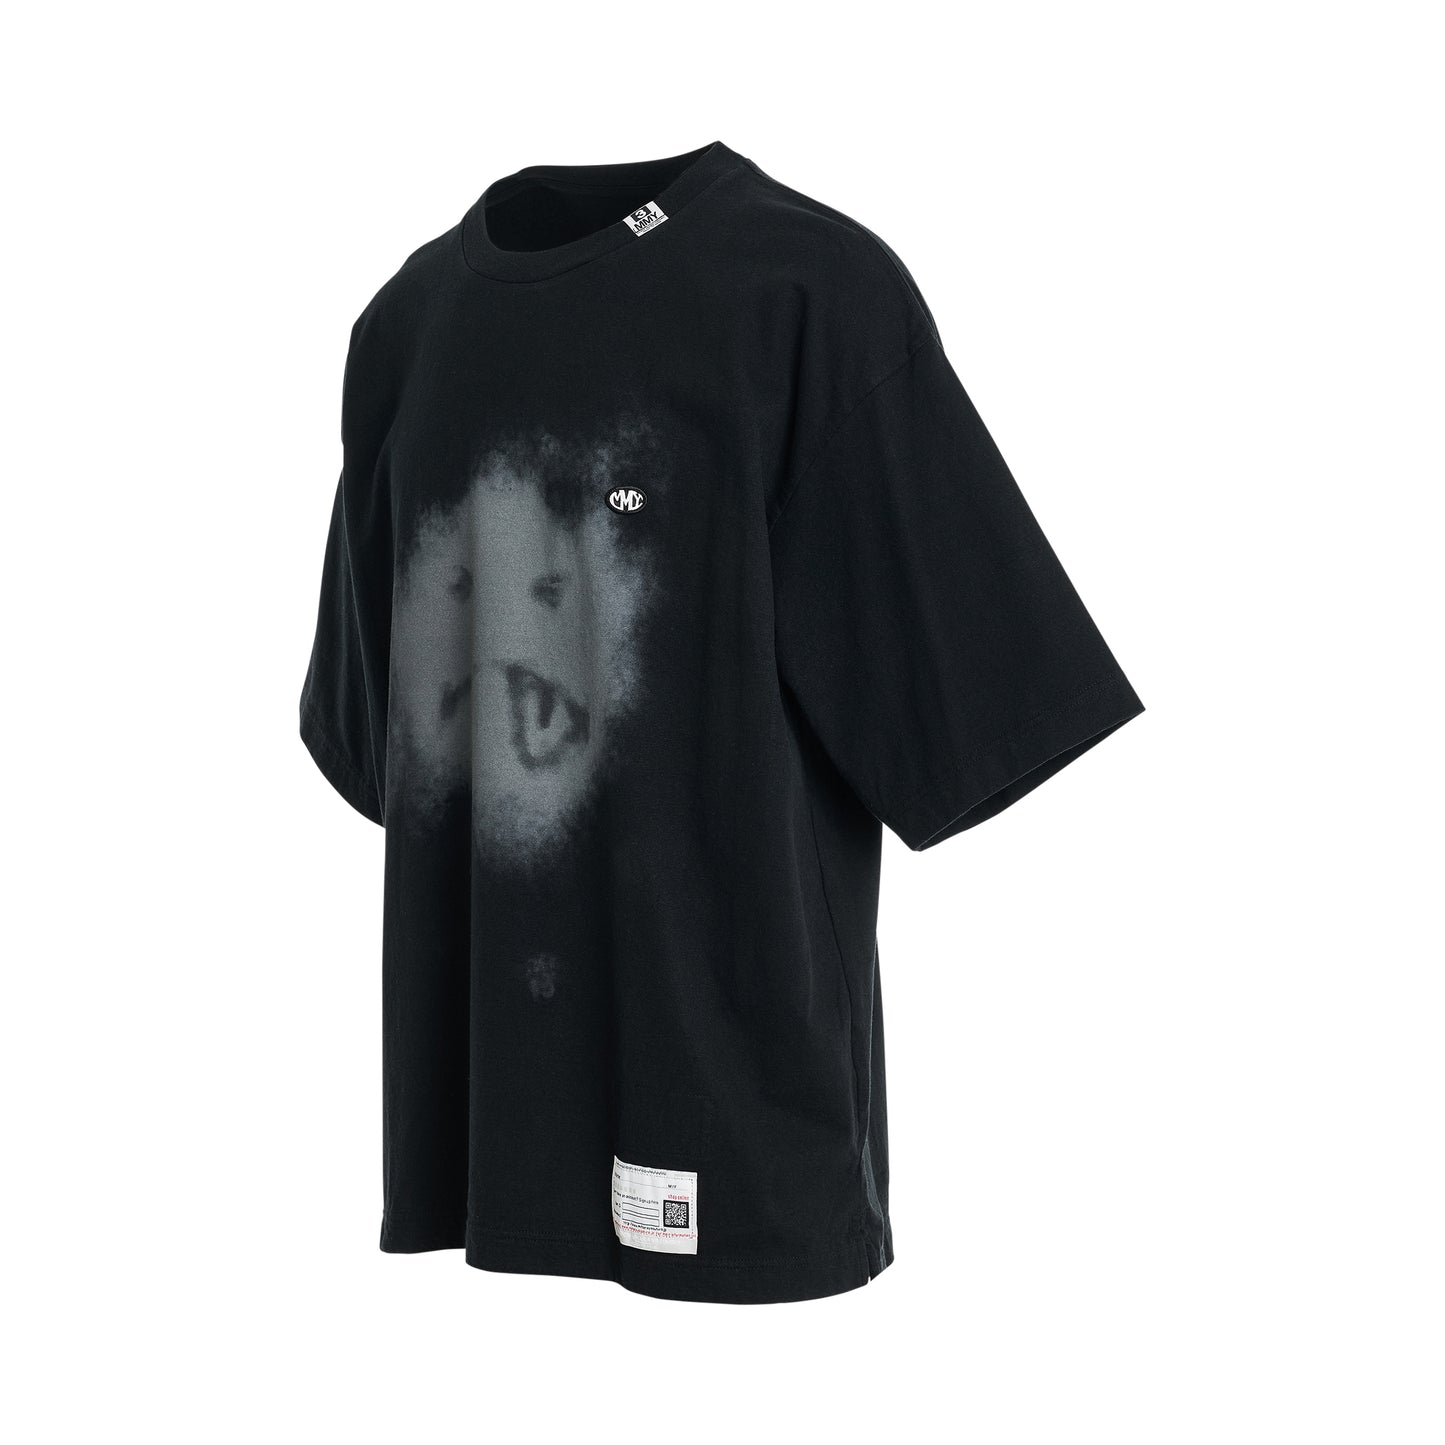 Sad Face Printed T-Shirt in Black